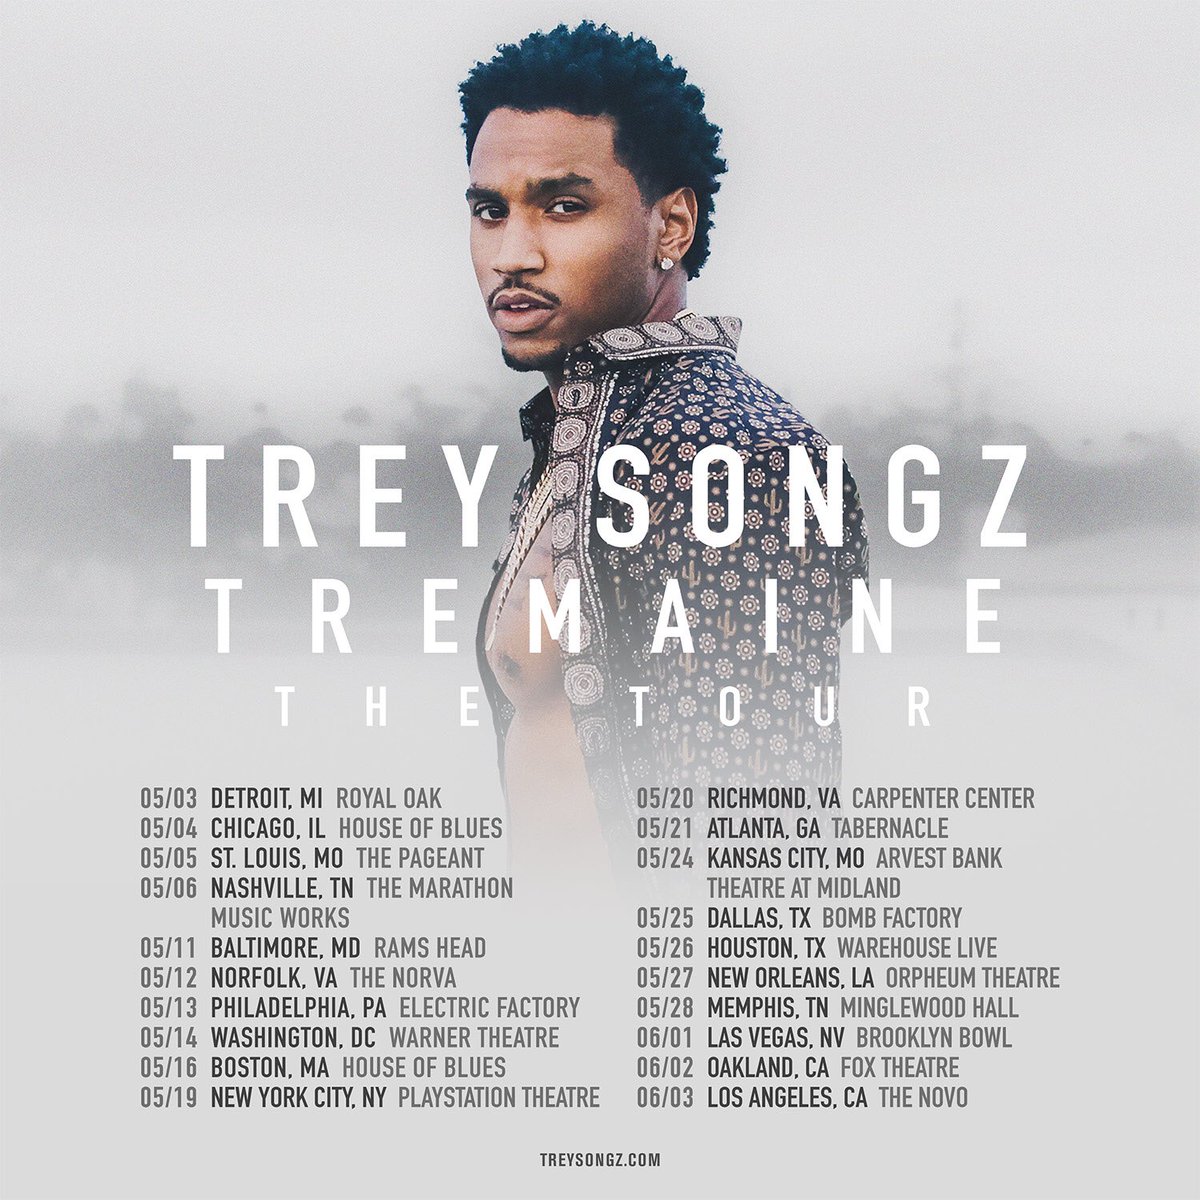 Trey songz tour tickets